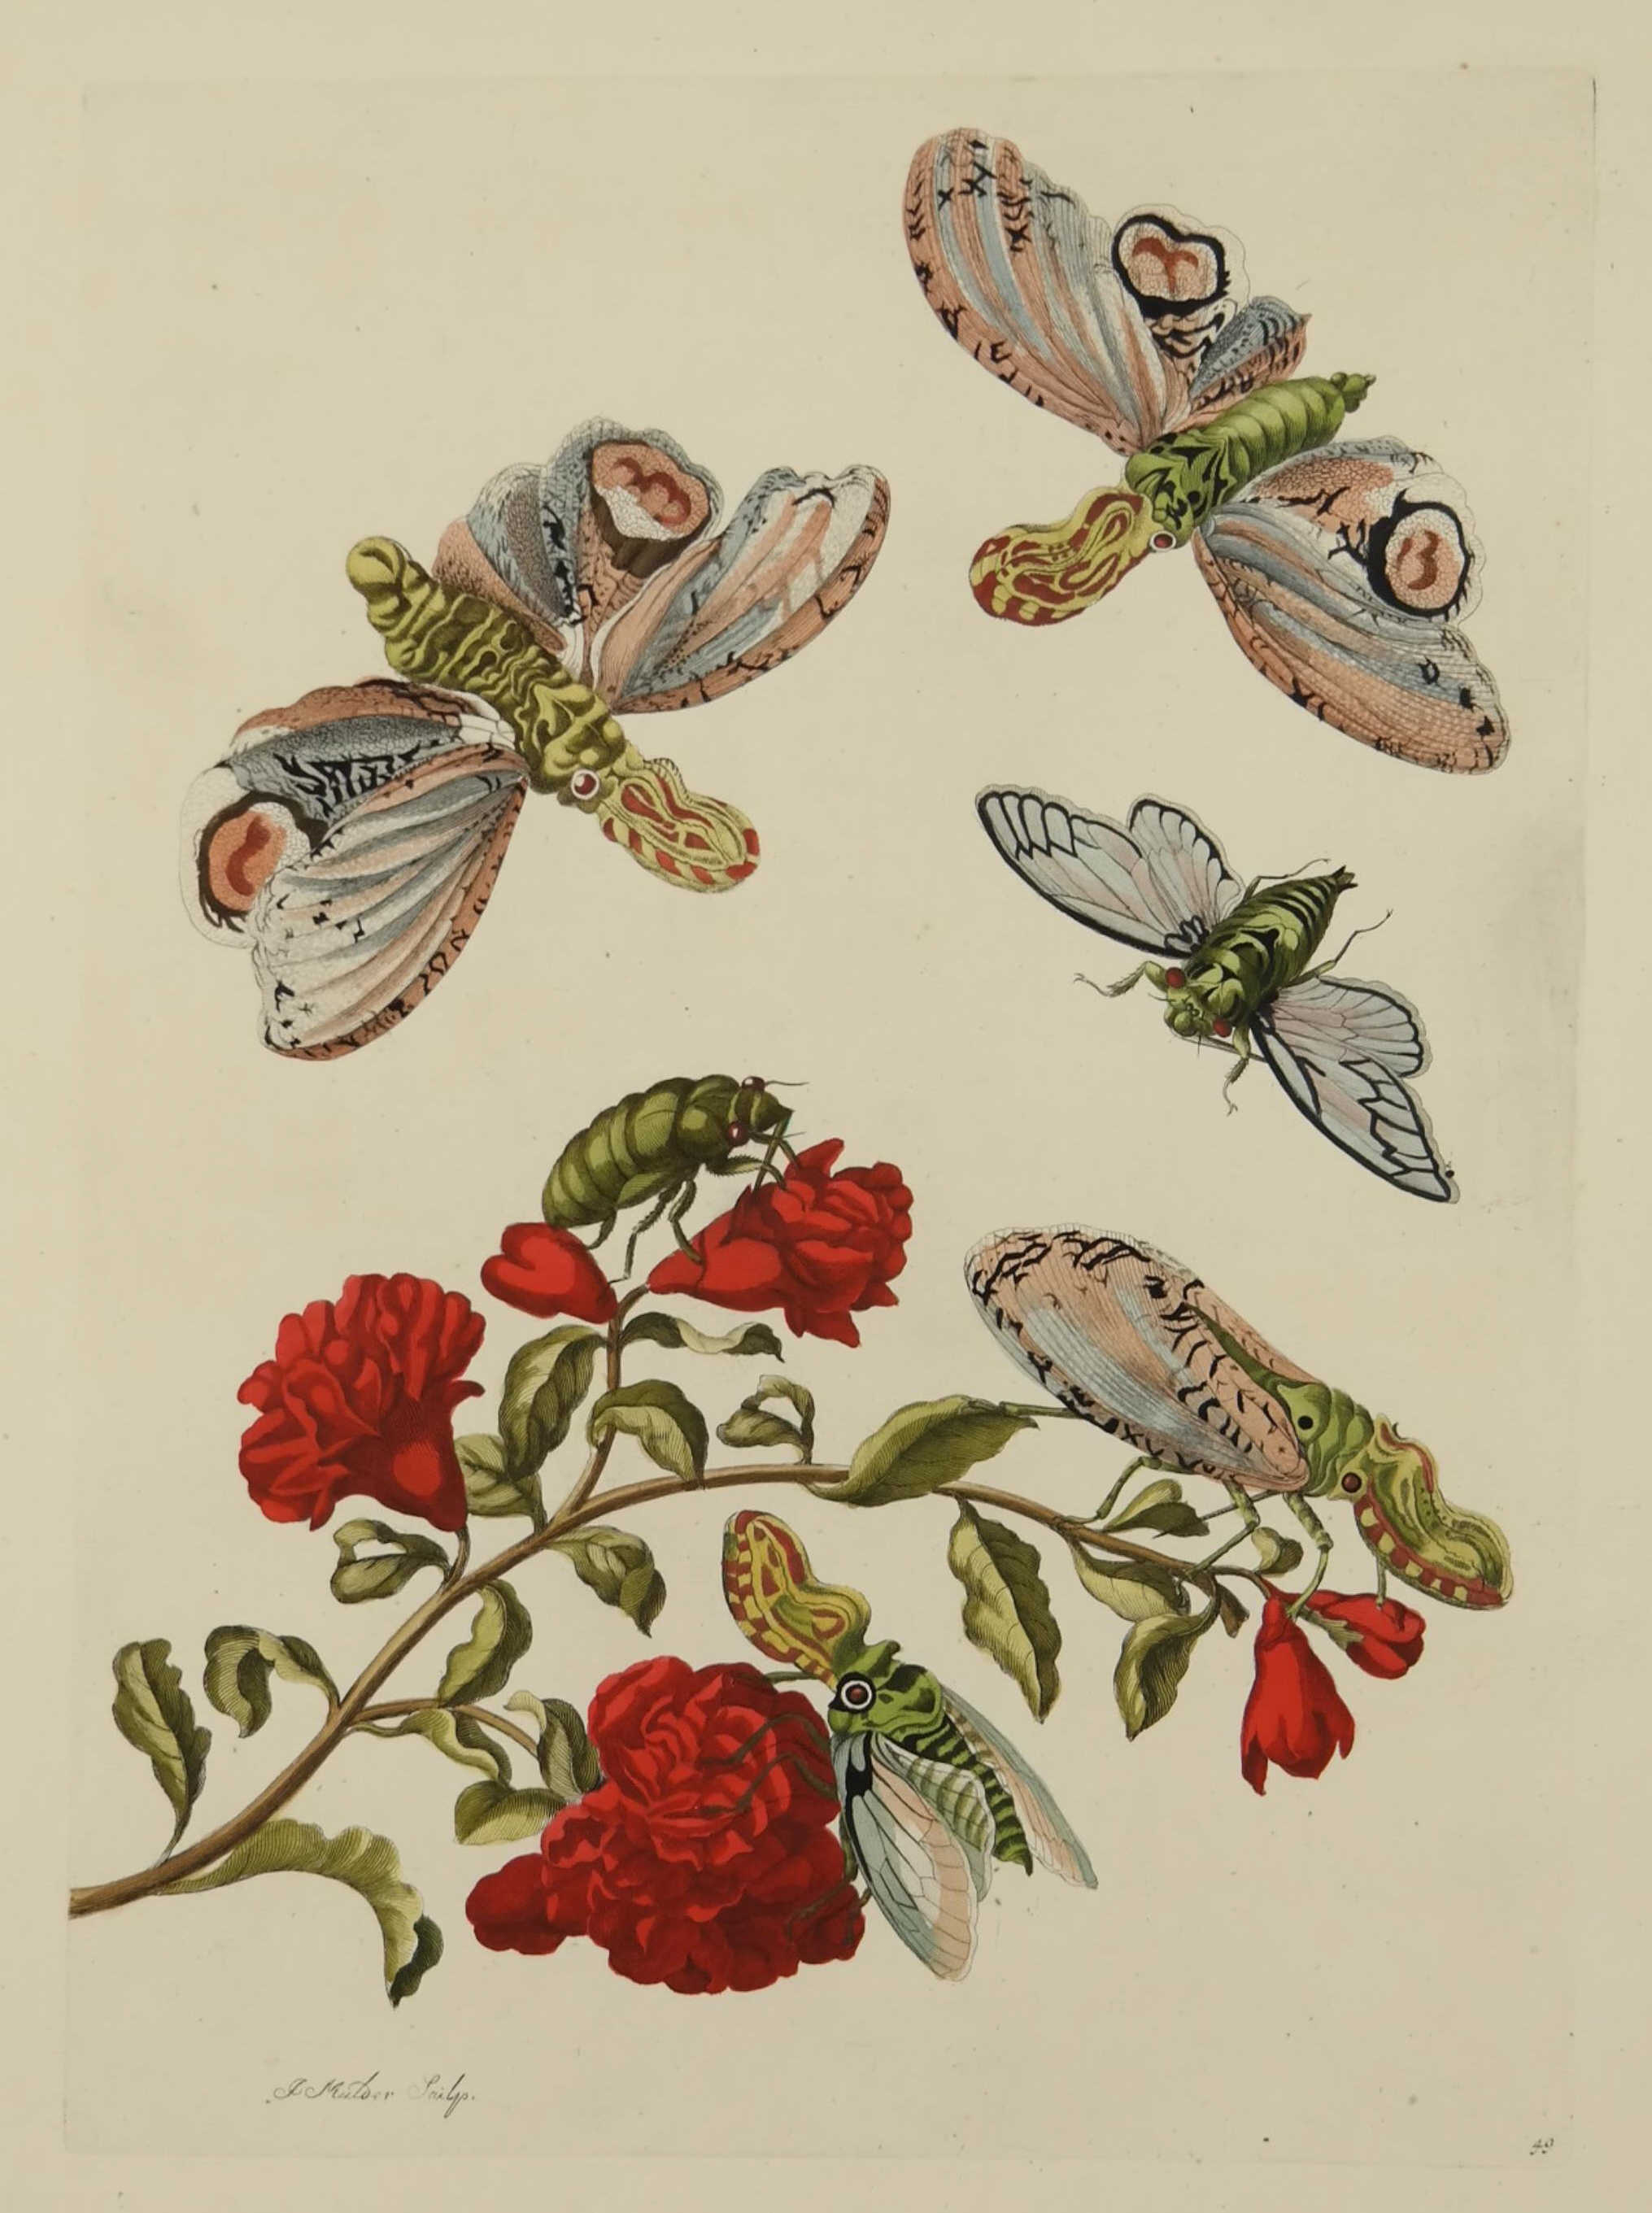 Waverly Sept. 13 auction features 15th-17th century books, nature prints, ephemera